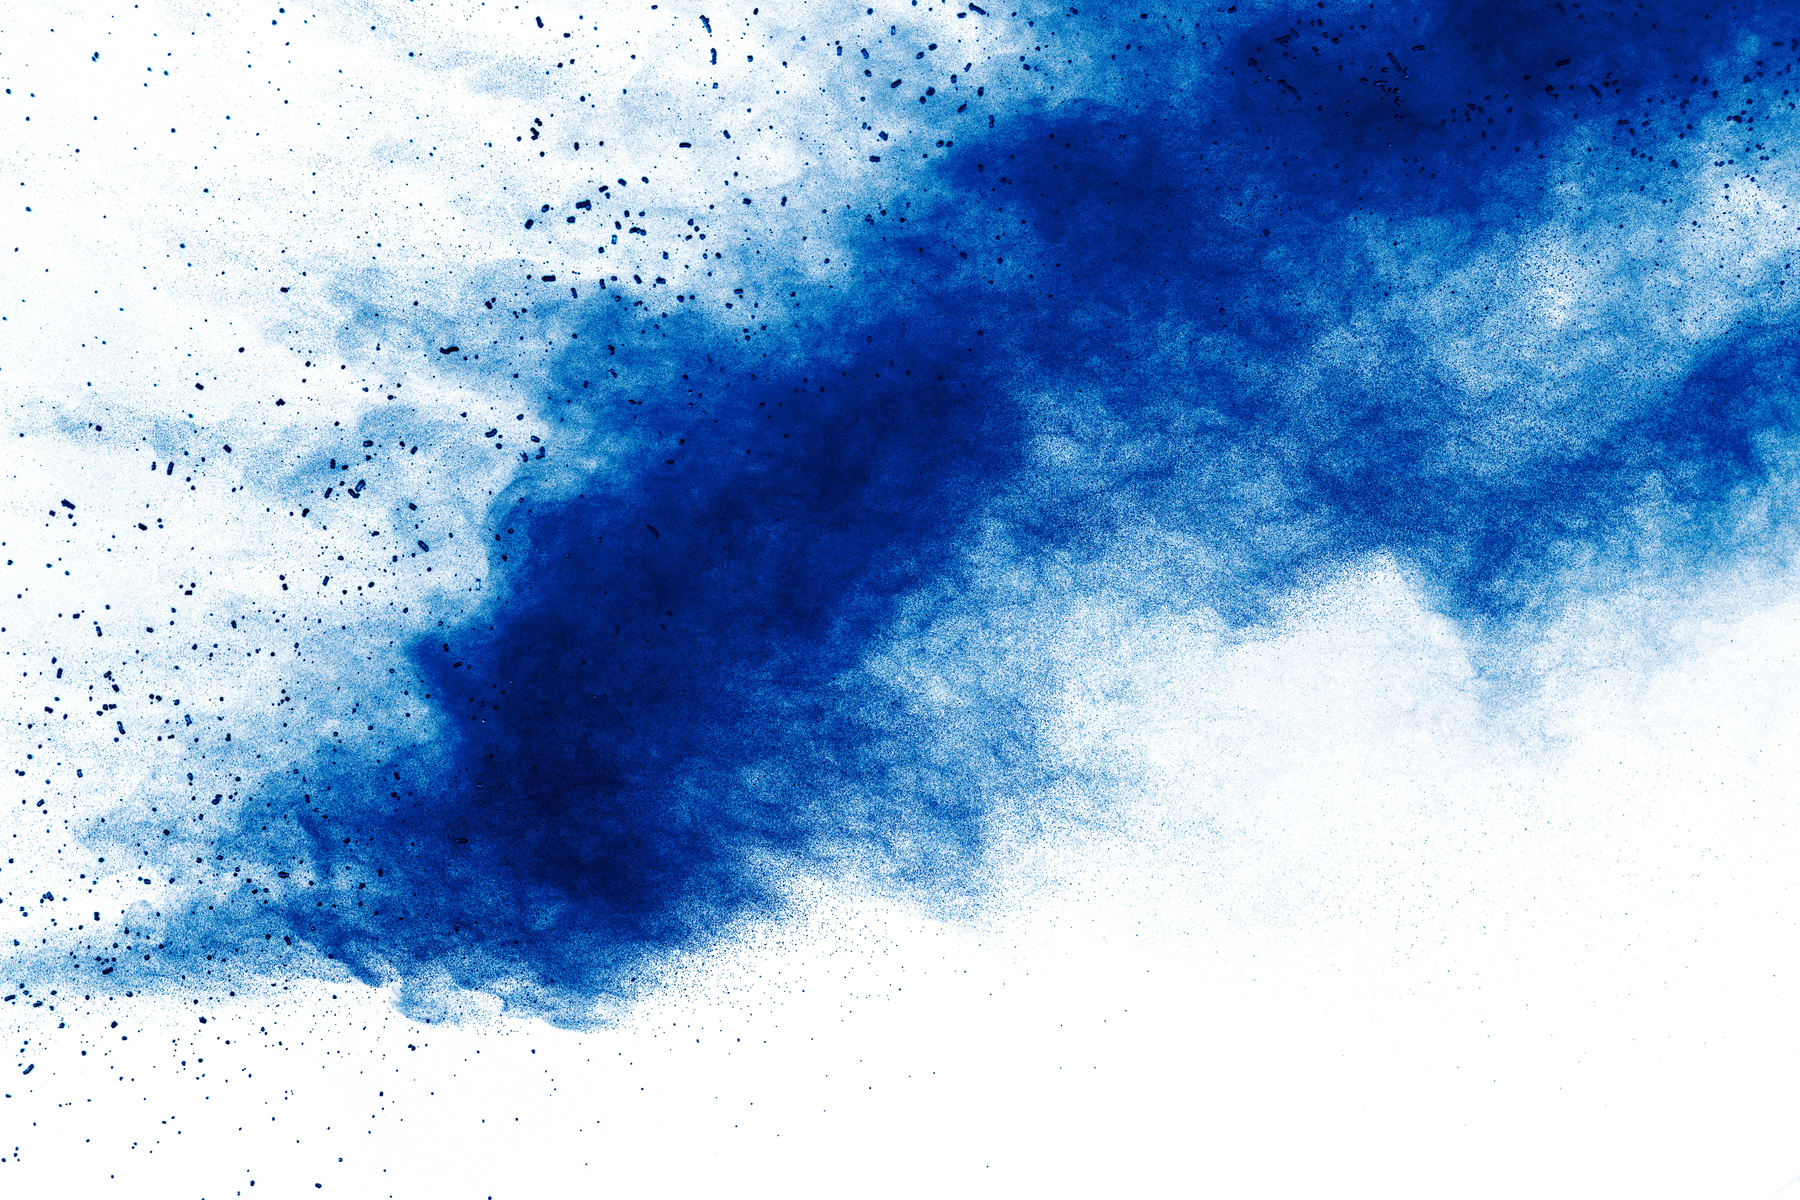 Abstract blue dust explosion on white background. Freeze motion of blue holi powder splash.